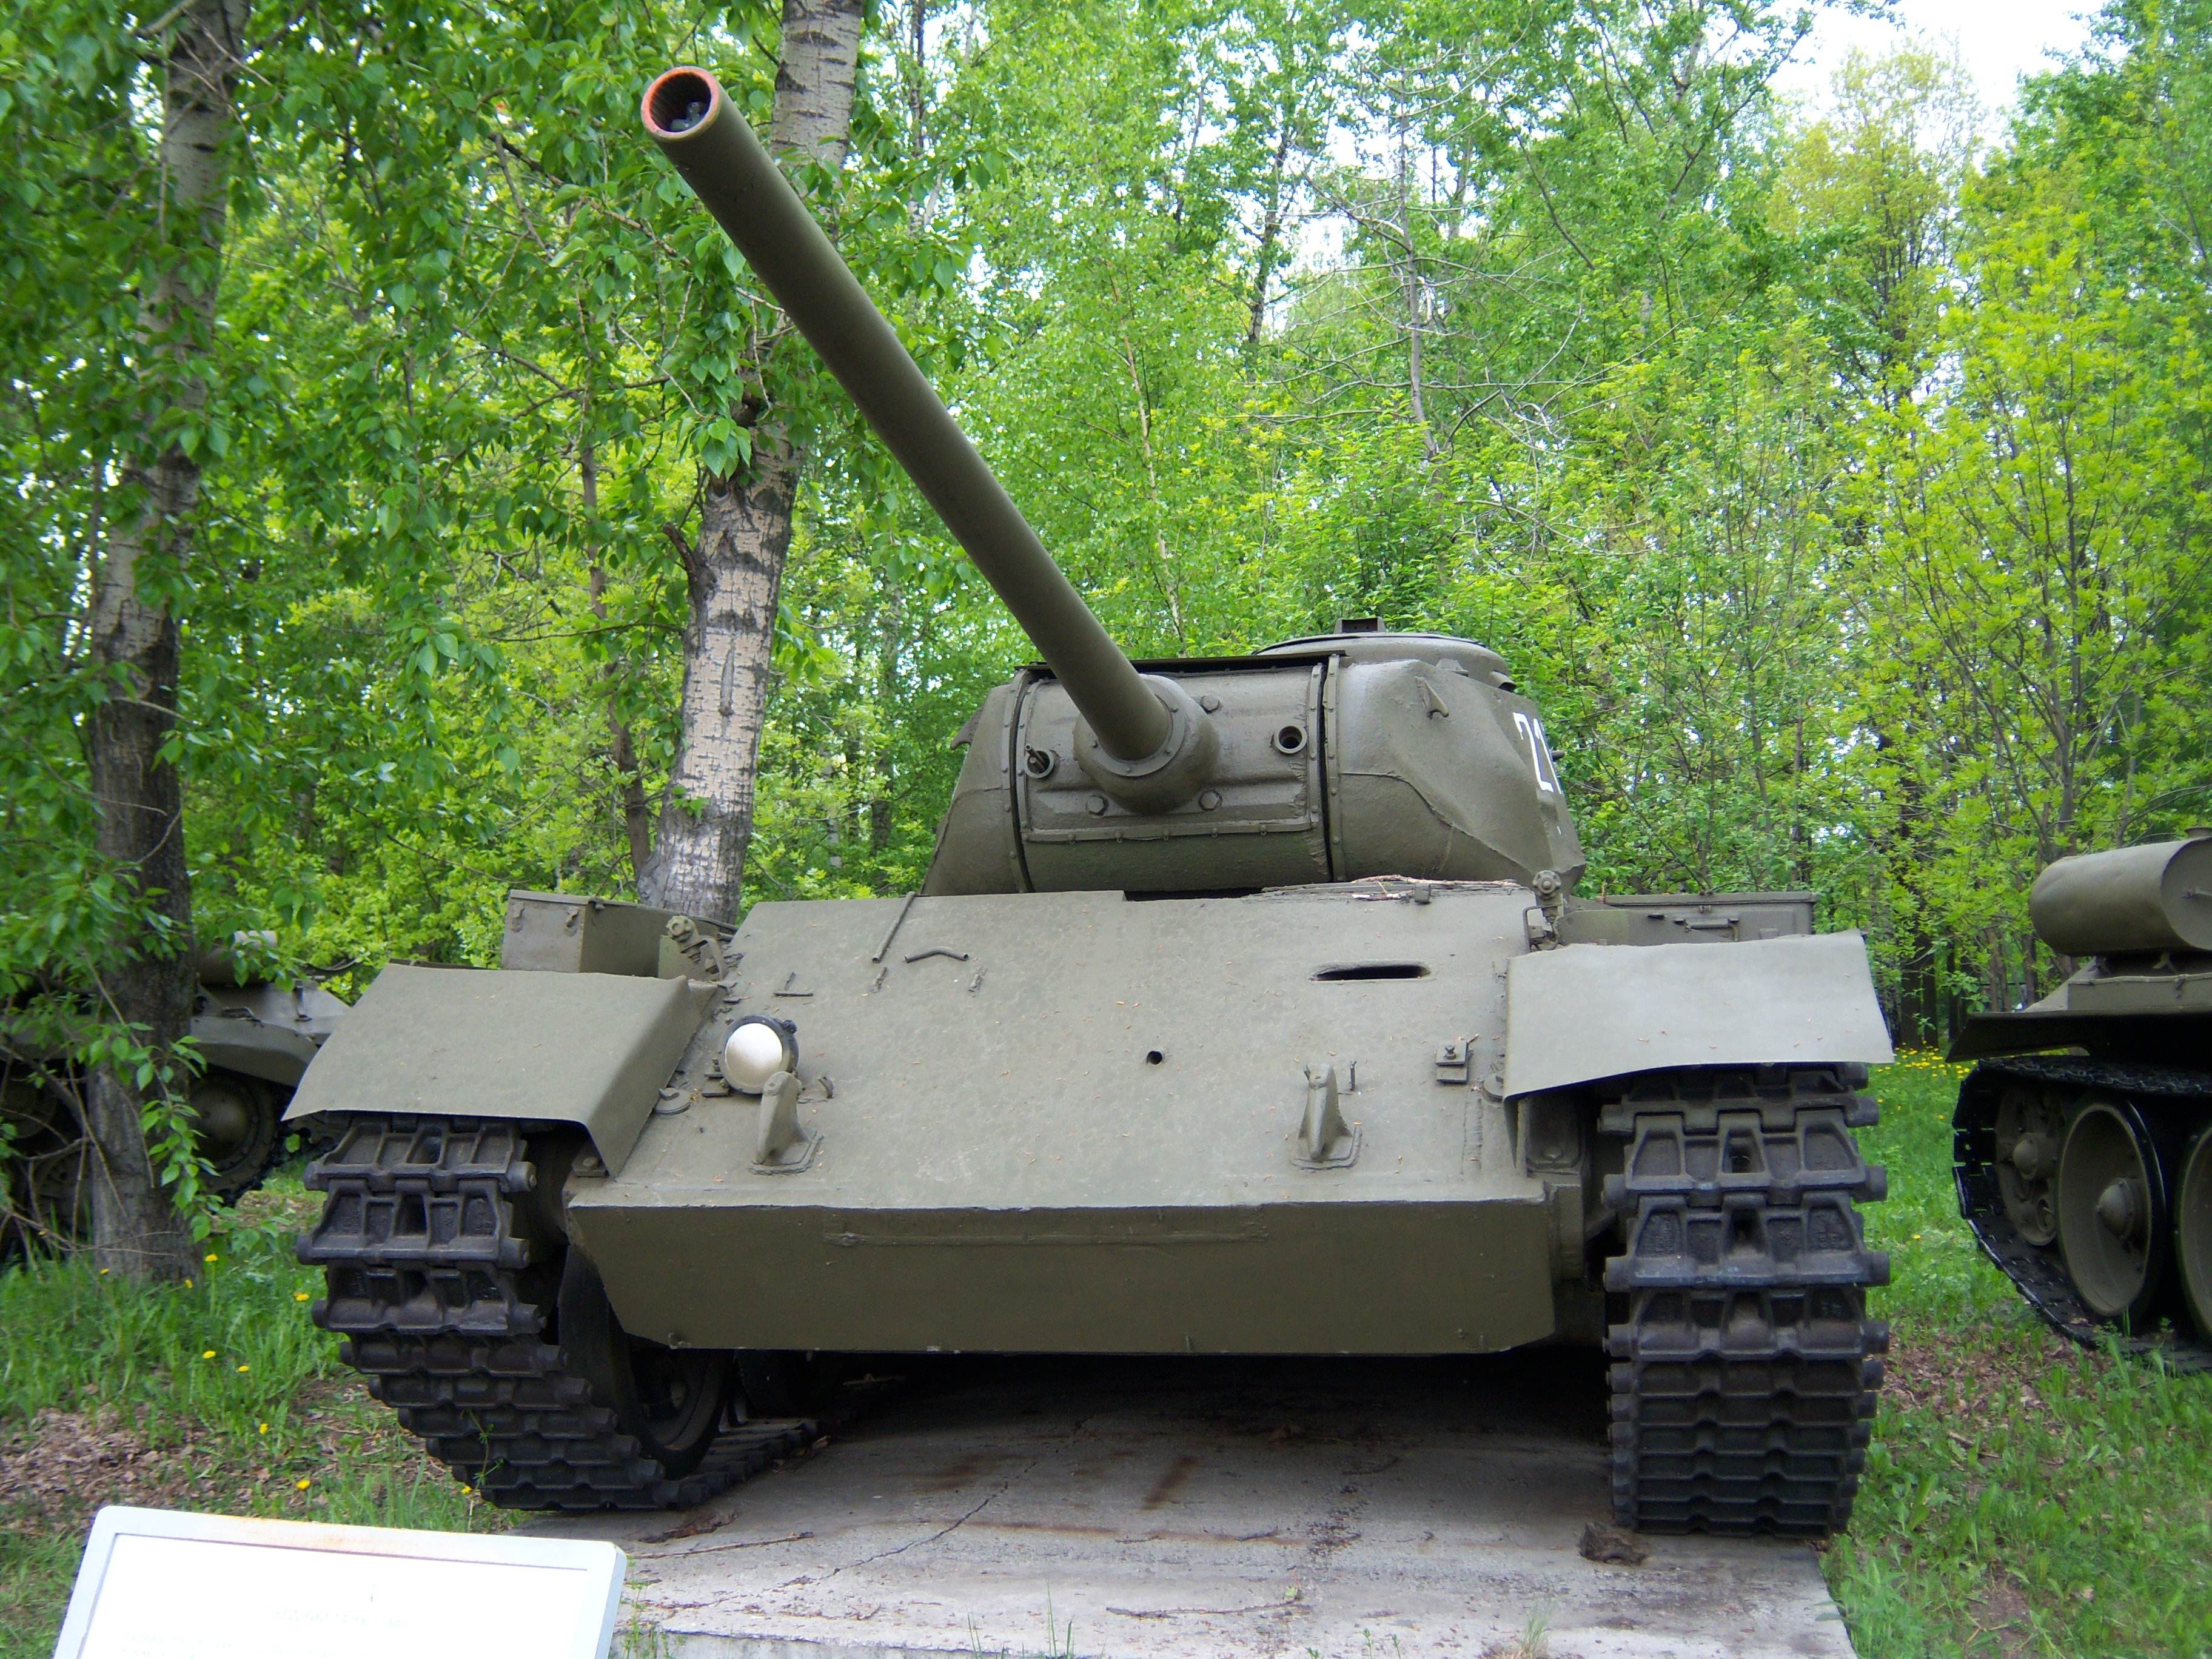 Tank T 44